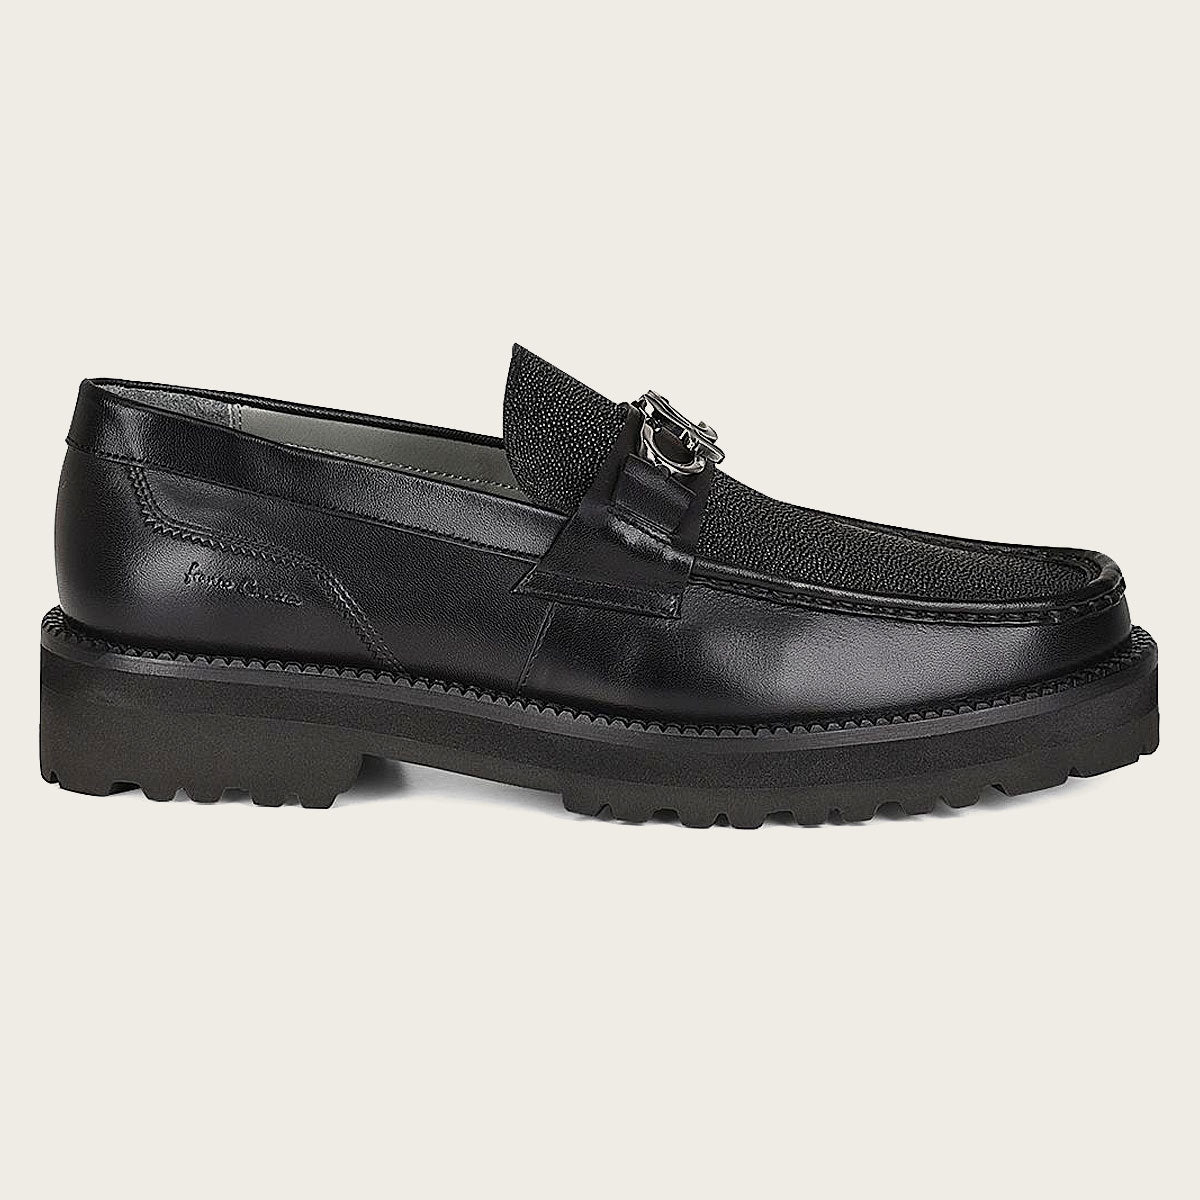 Men loafer shoe in black genuine stingray leather